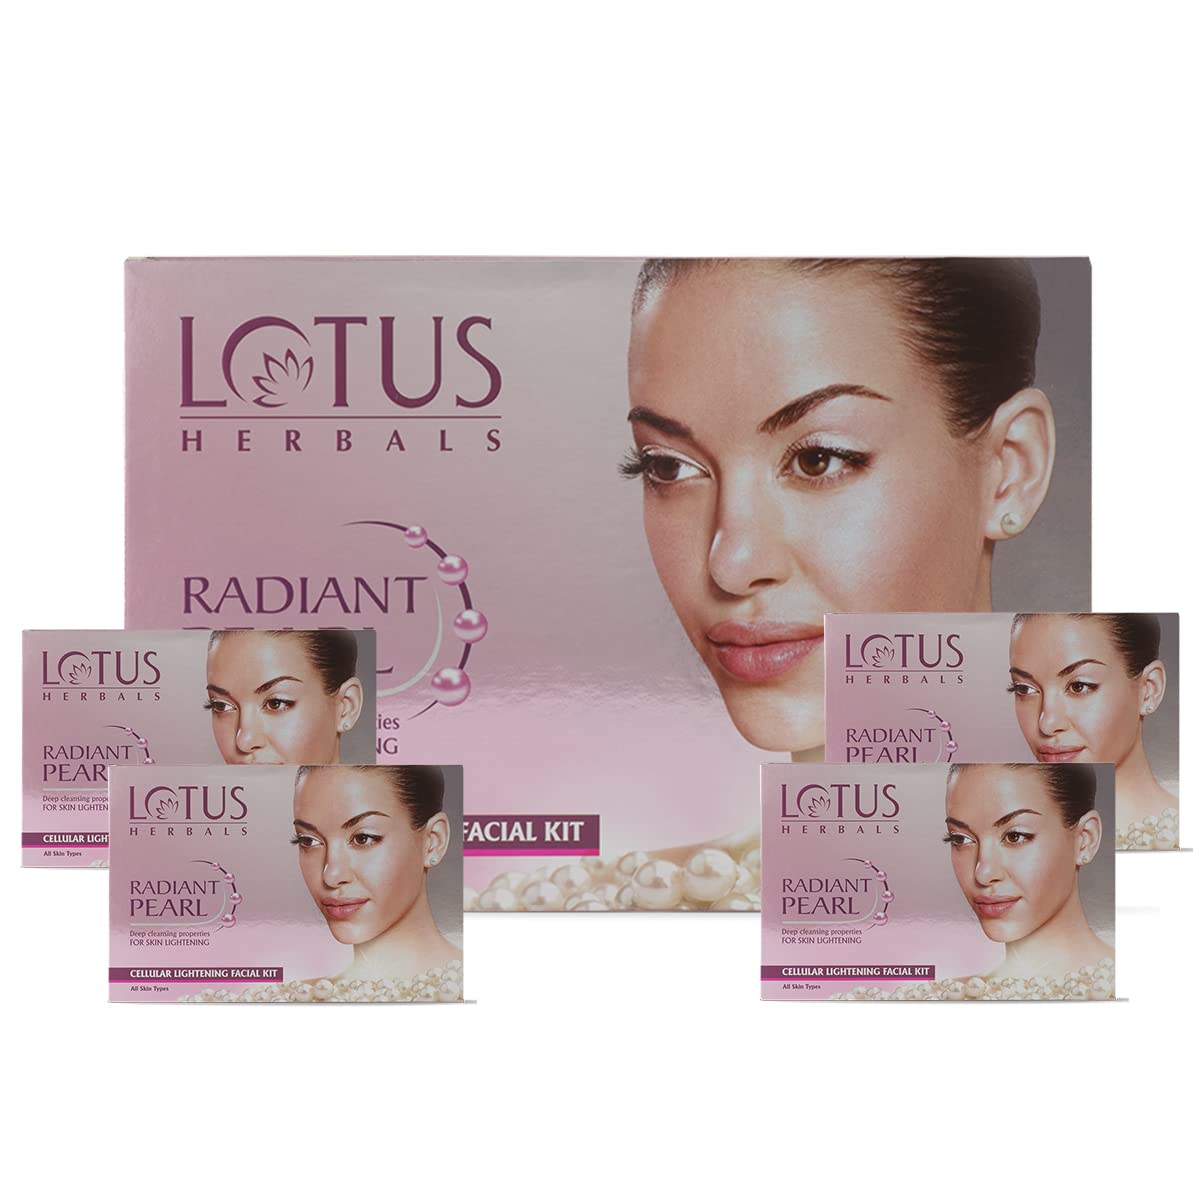 Lotus Herbals Radiant Pearl Cellular Lightening Facial Kit, 37g